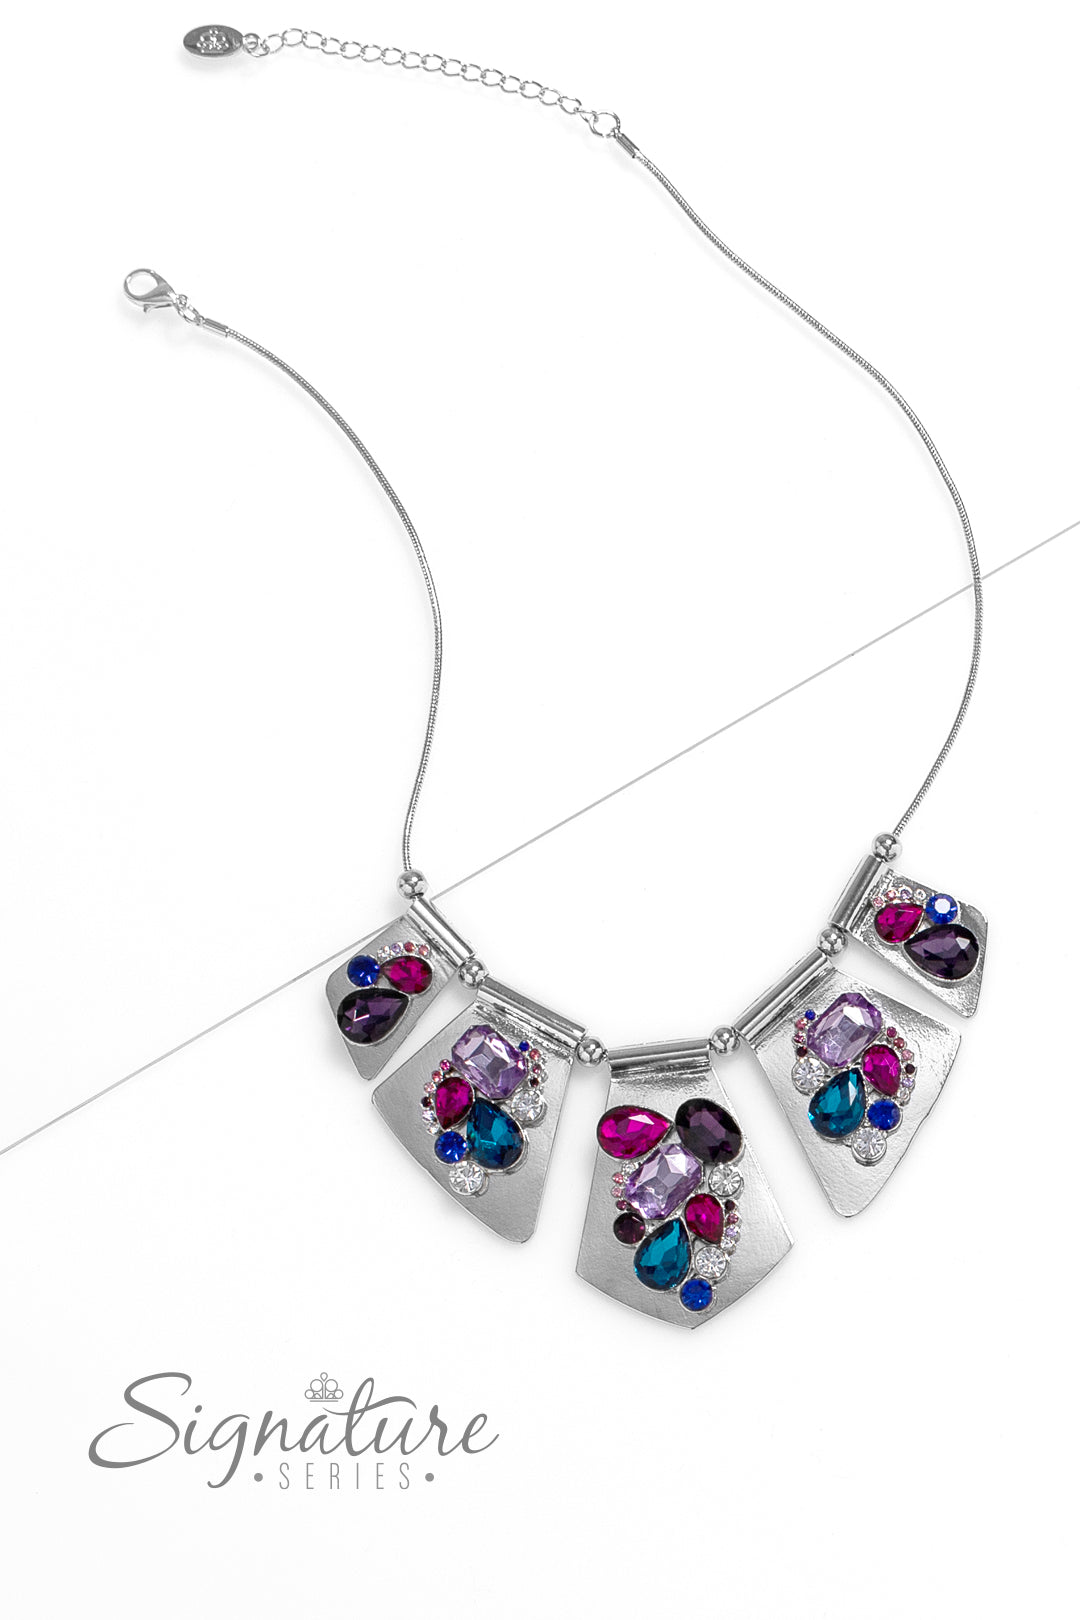 Allure Necklace Lauranna Pearl - Accessories Necklaces by – Cupidanza